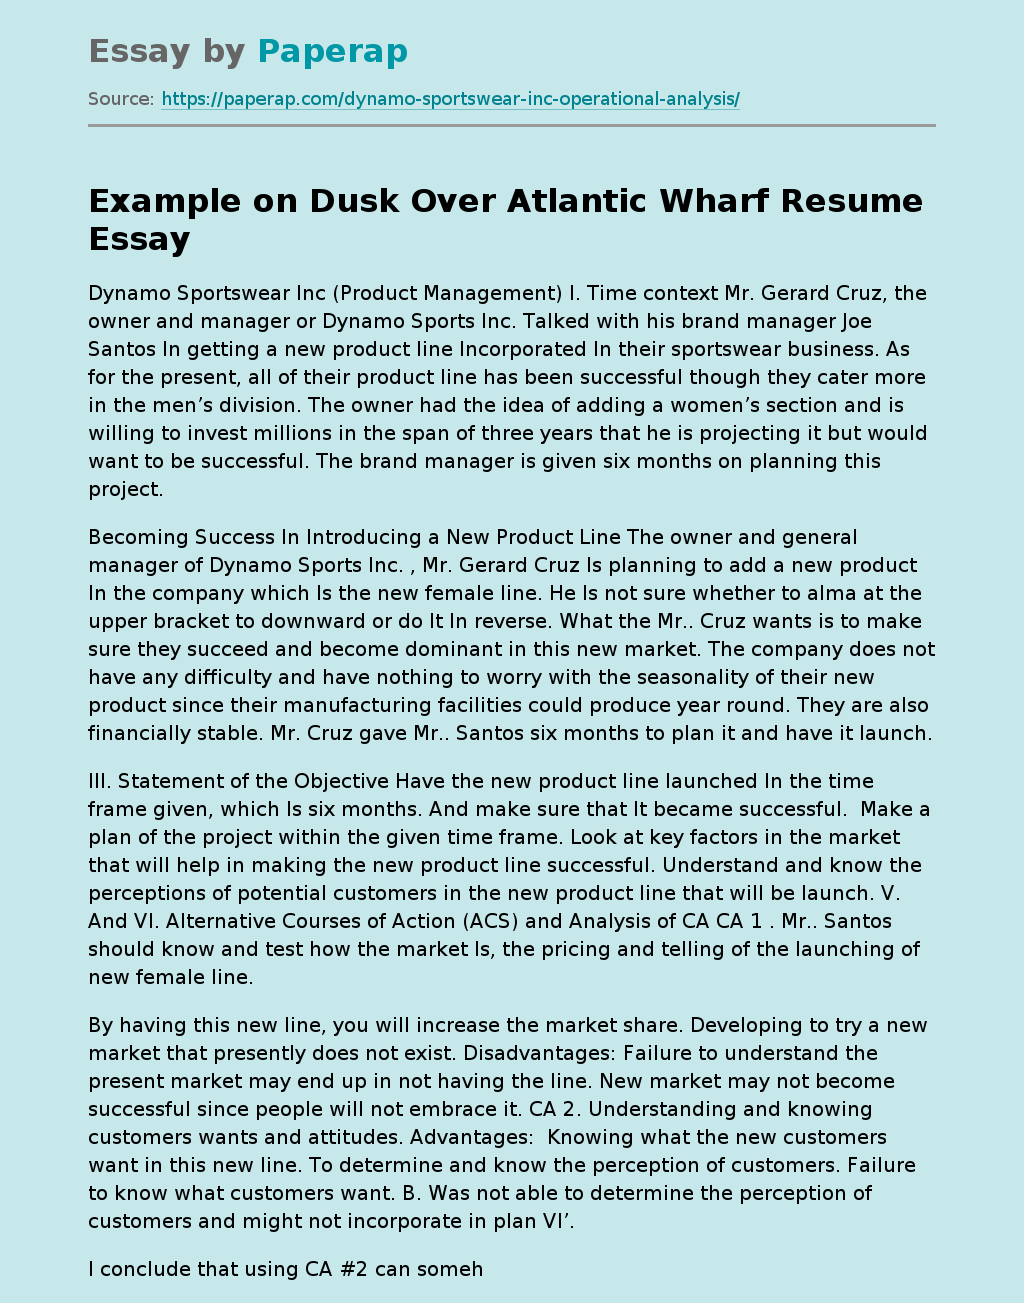 Example on Dusk Over Atlantic Wharf Resume